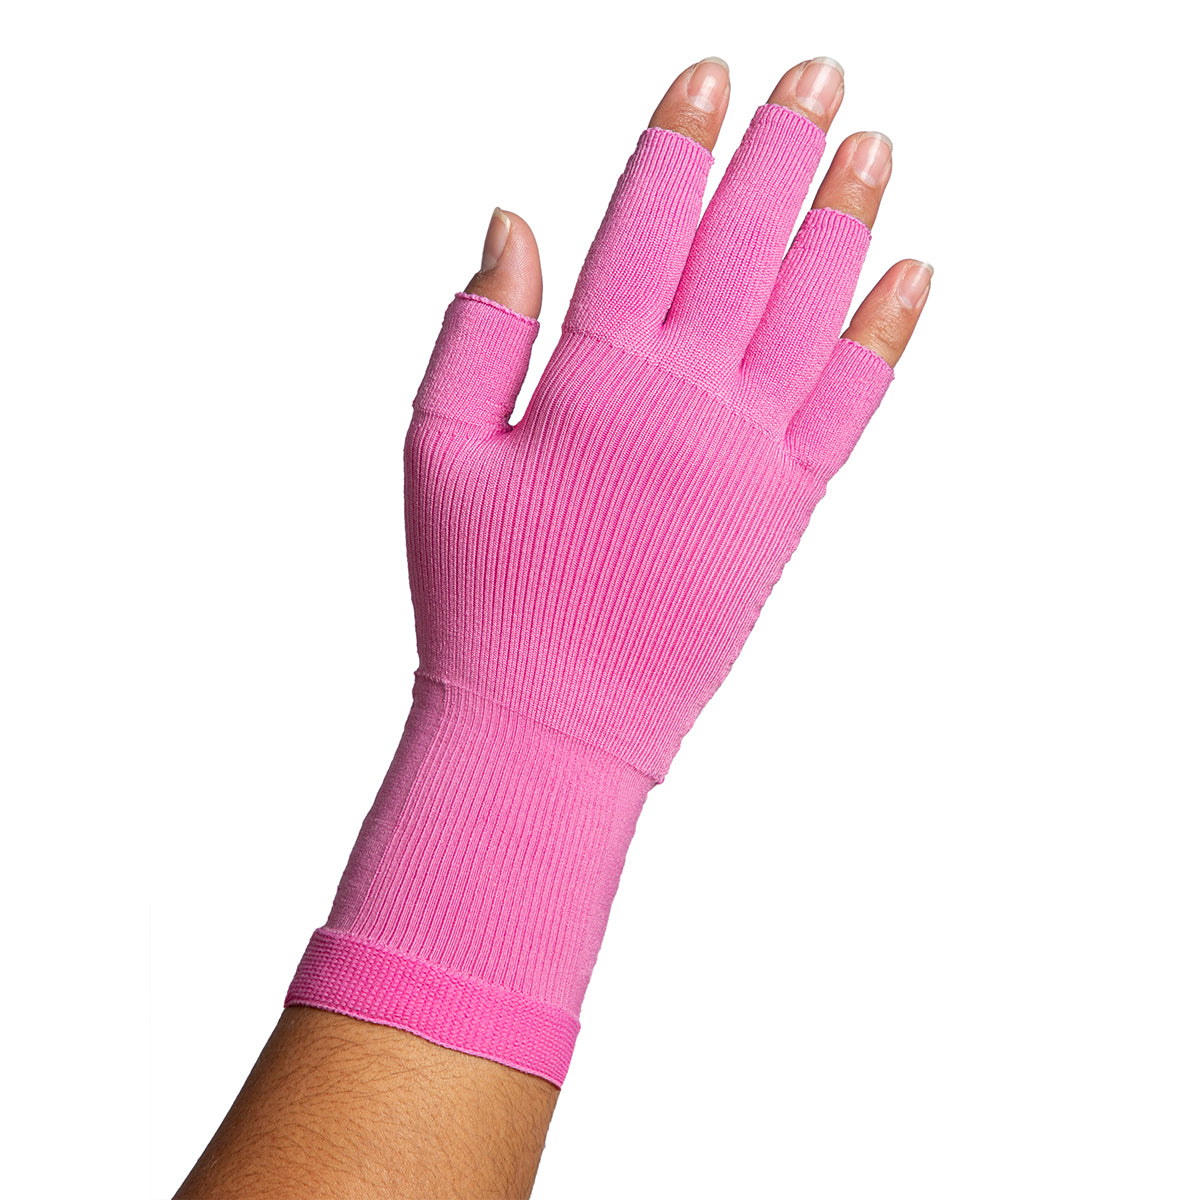 Sigvaris Secure 561 Lymphedema Glove - 15-20 mmHg | Ames Walker